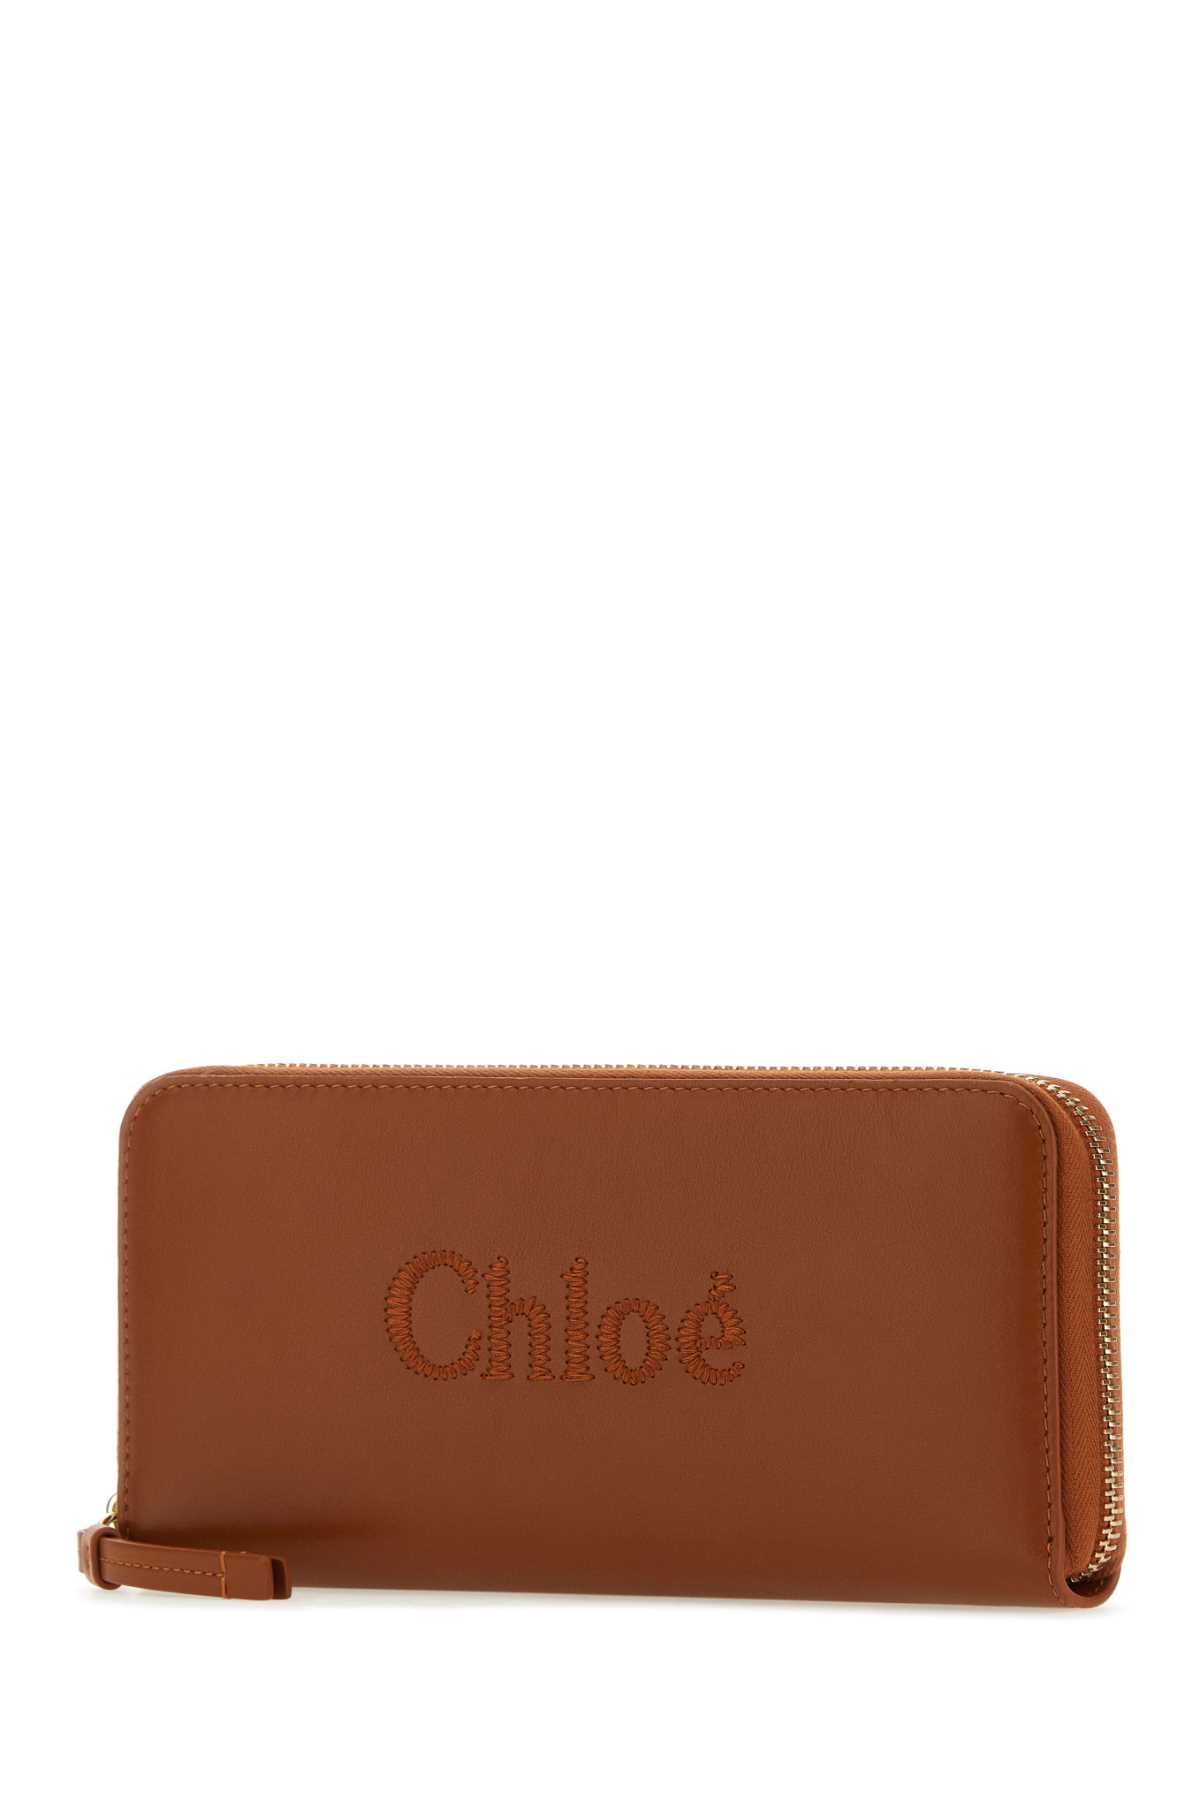 Shop Chloé Caramel Nappa Leather Wallet